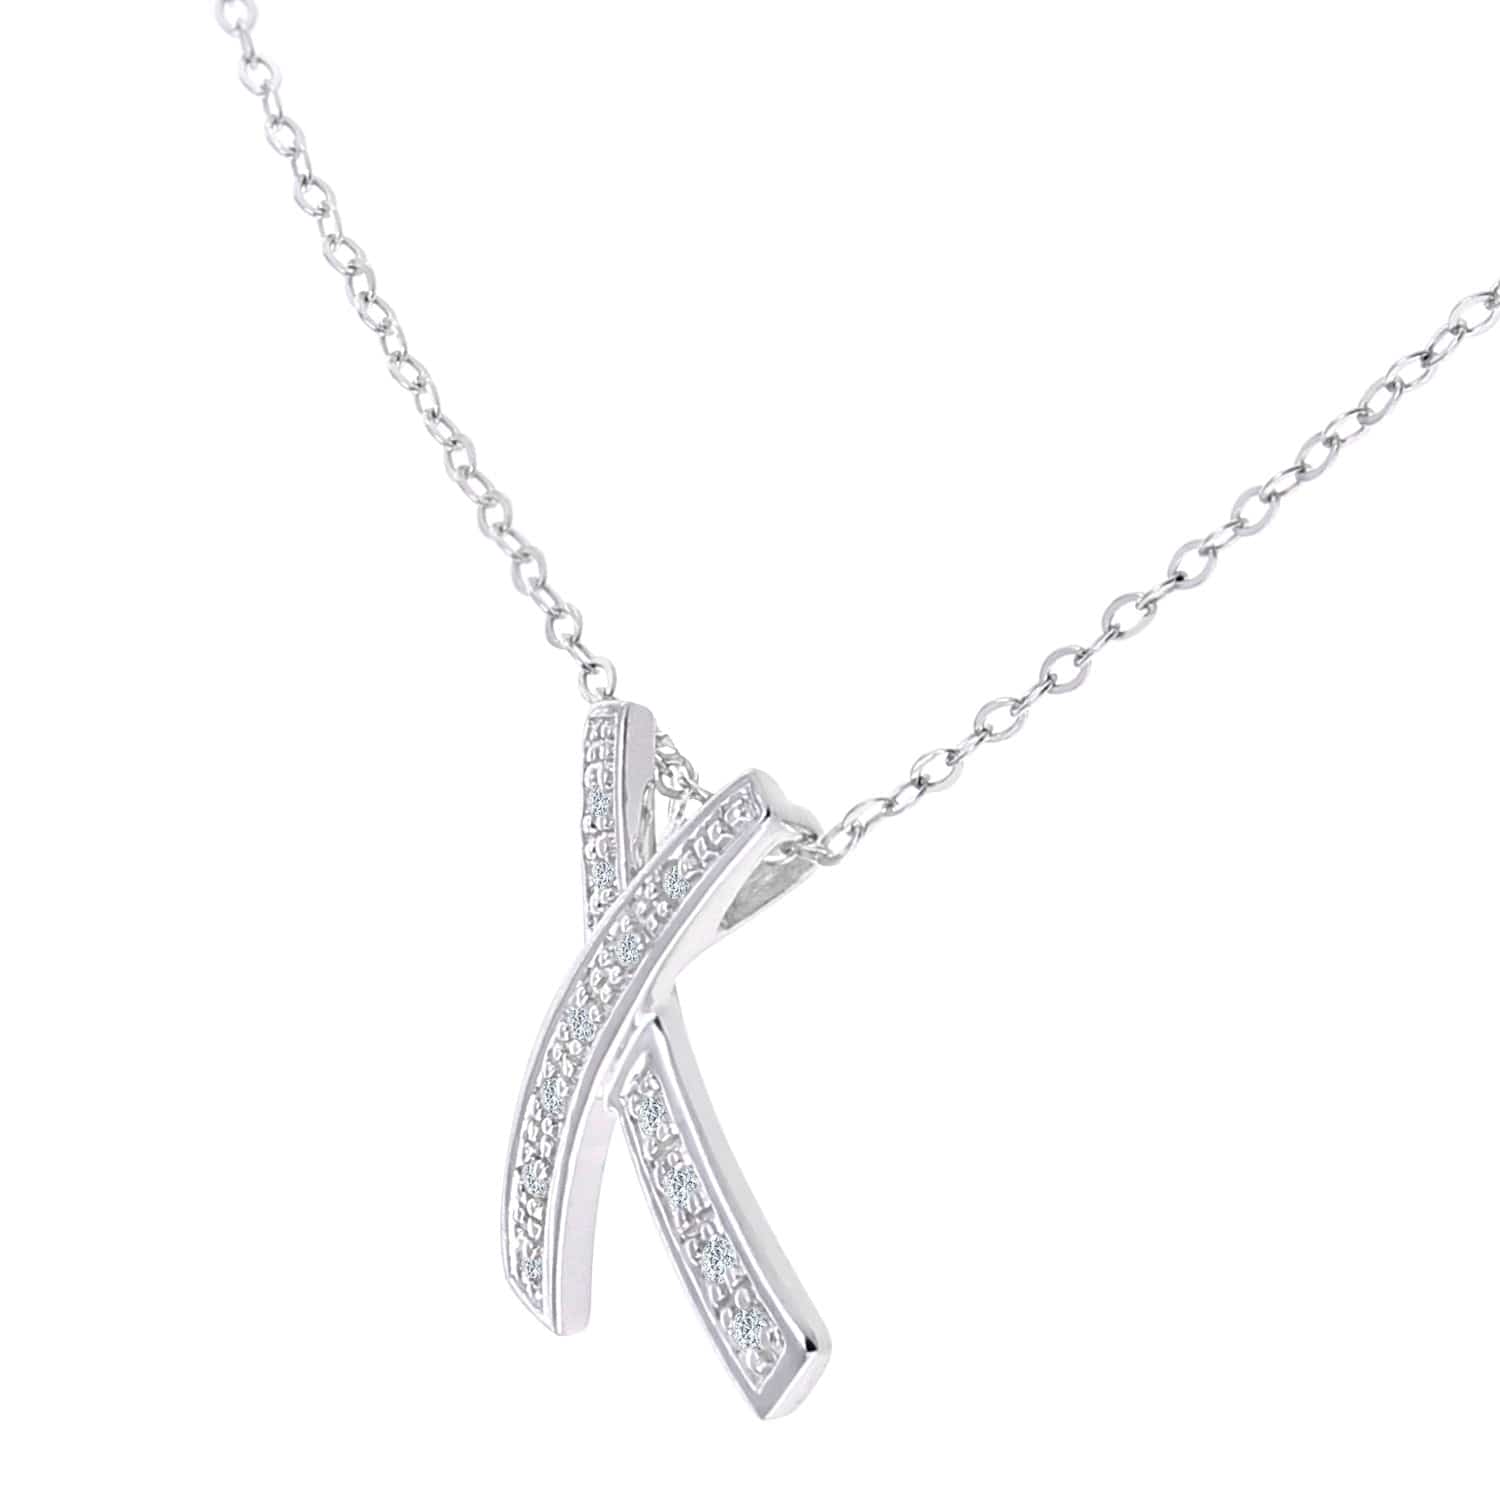 Lynora Luxe Pendant White Gold 9ct / Diamond 9ct White Gold Diamond Kiss Pendant Necklace